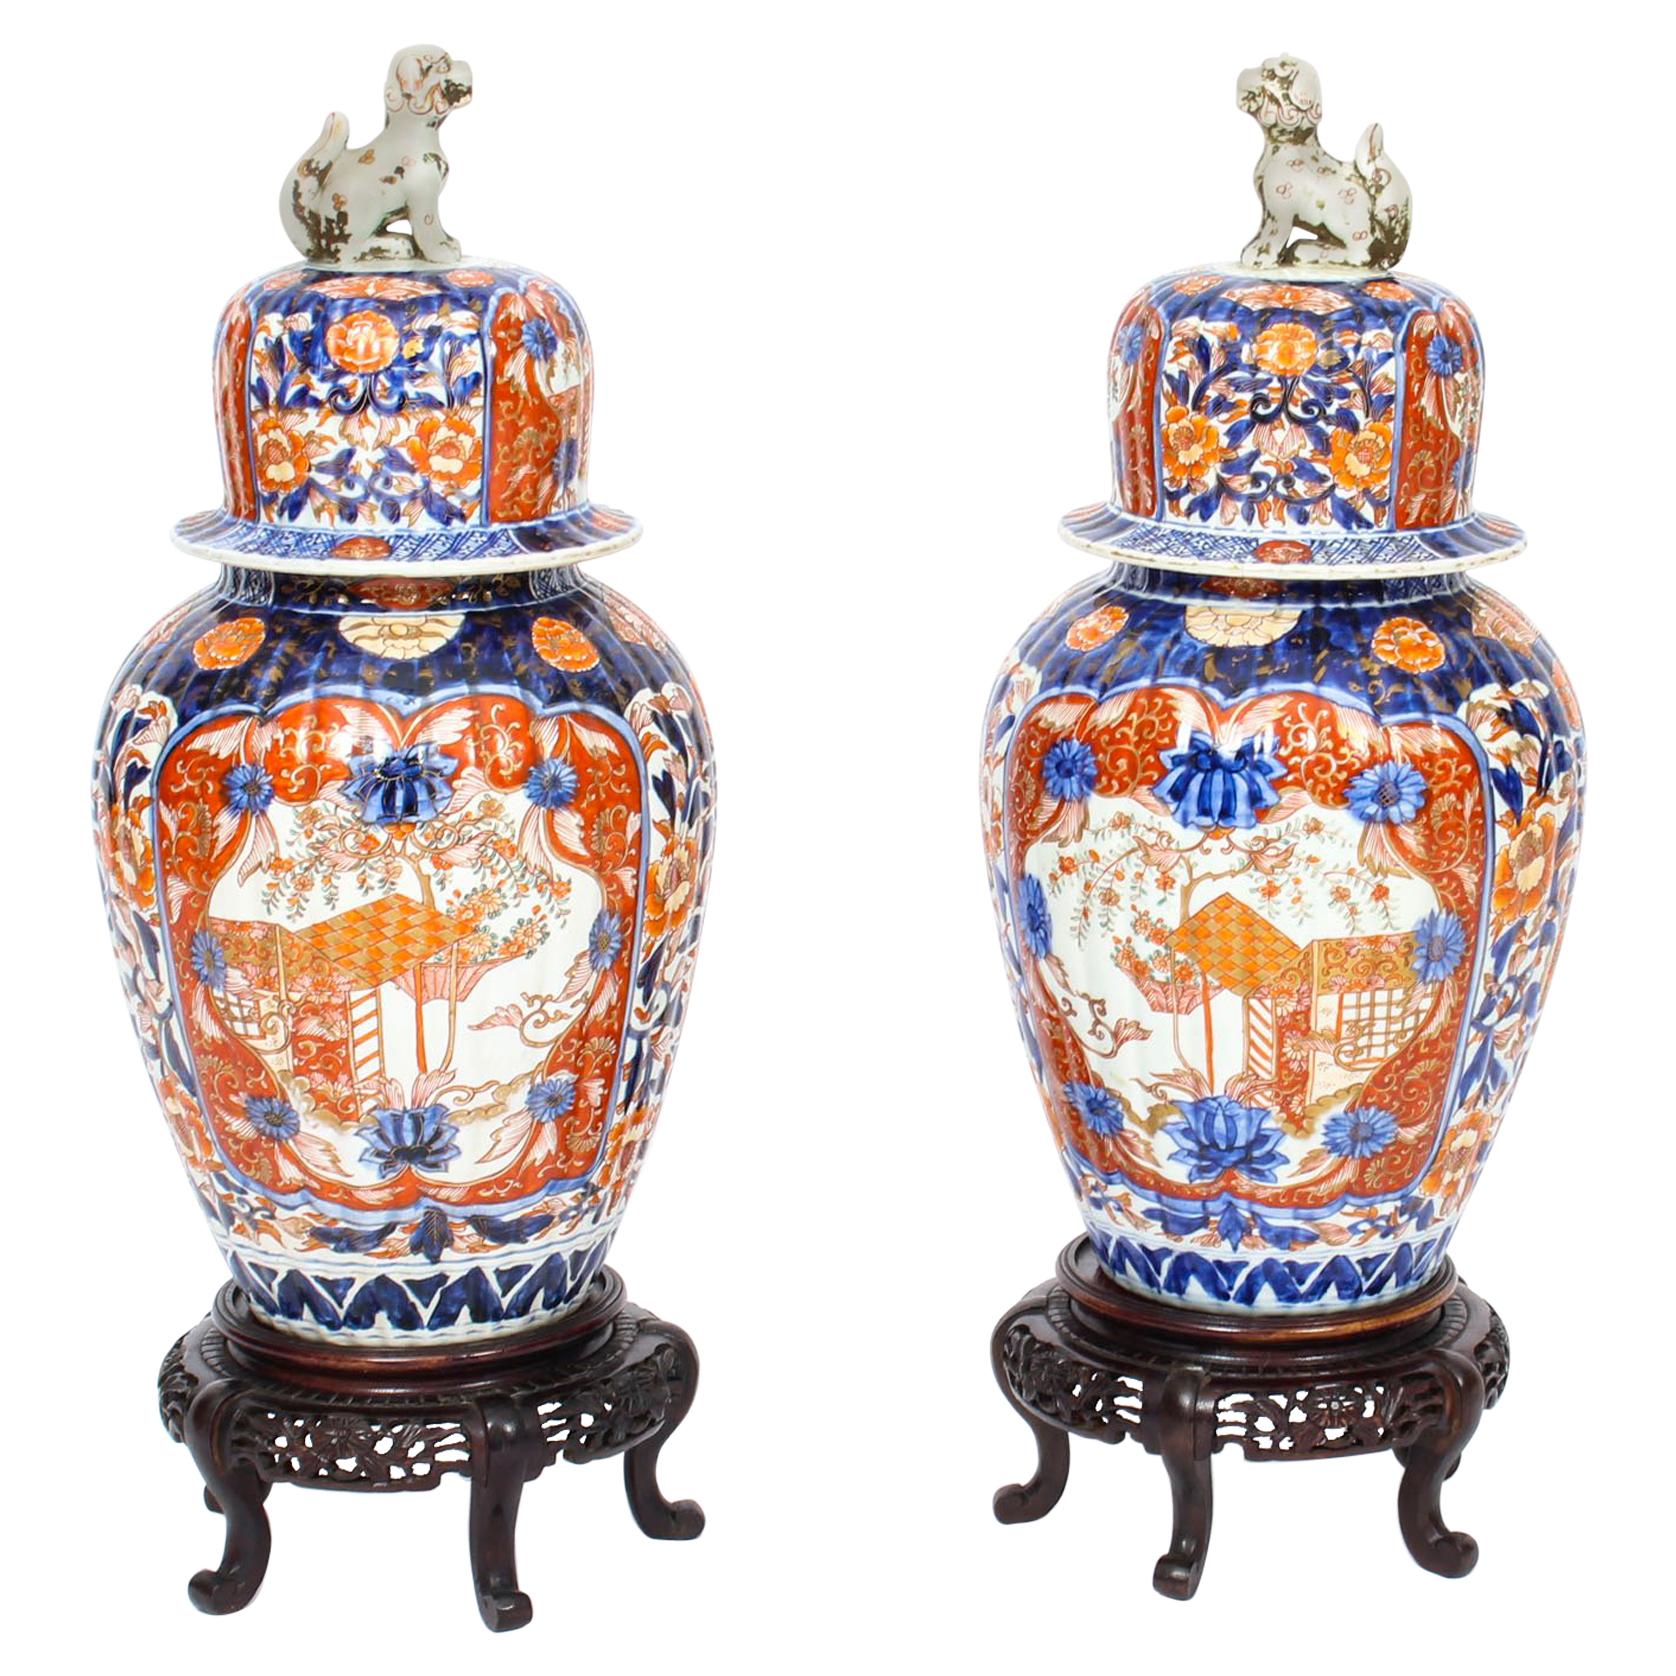 Antique Large Pair Japanese Imari Porcelain Vases on Stands, 19th Century